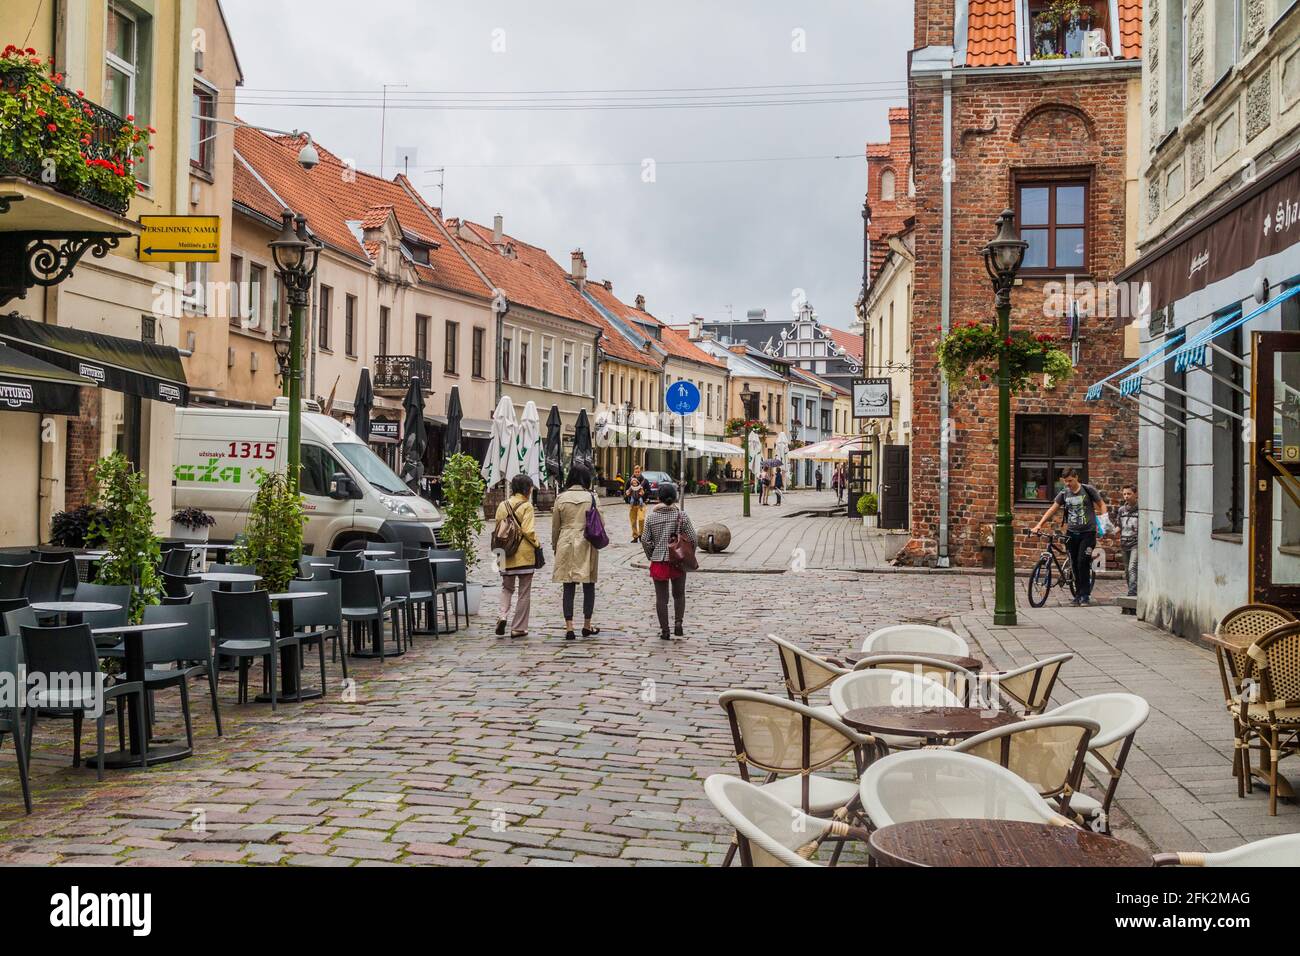 KAUNAS, LITHUANIA - AUGUST 17, 2016: People walk along Vilniaus gatve street in Kaunas, Lithuania Stock Photo